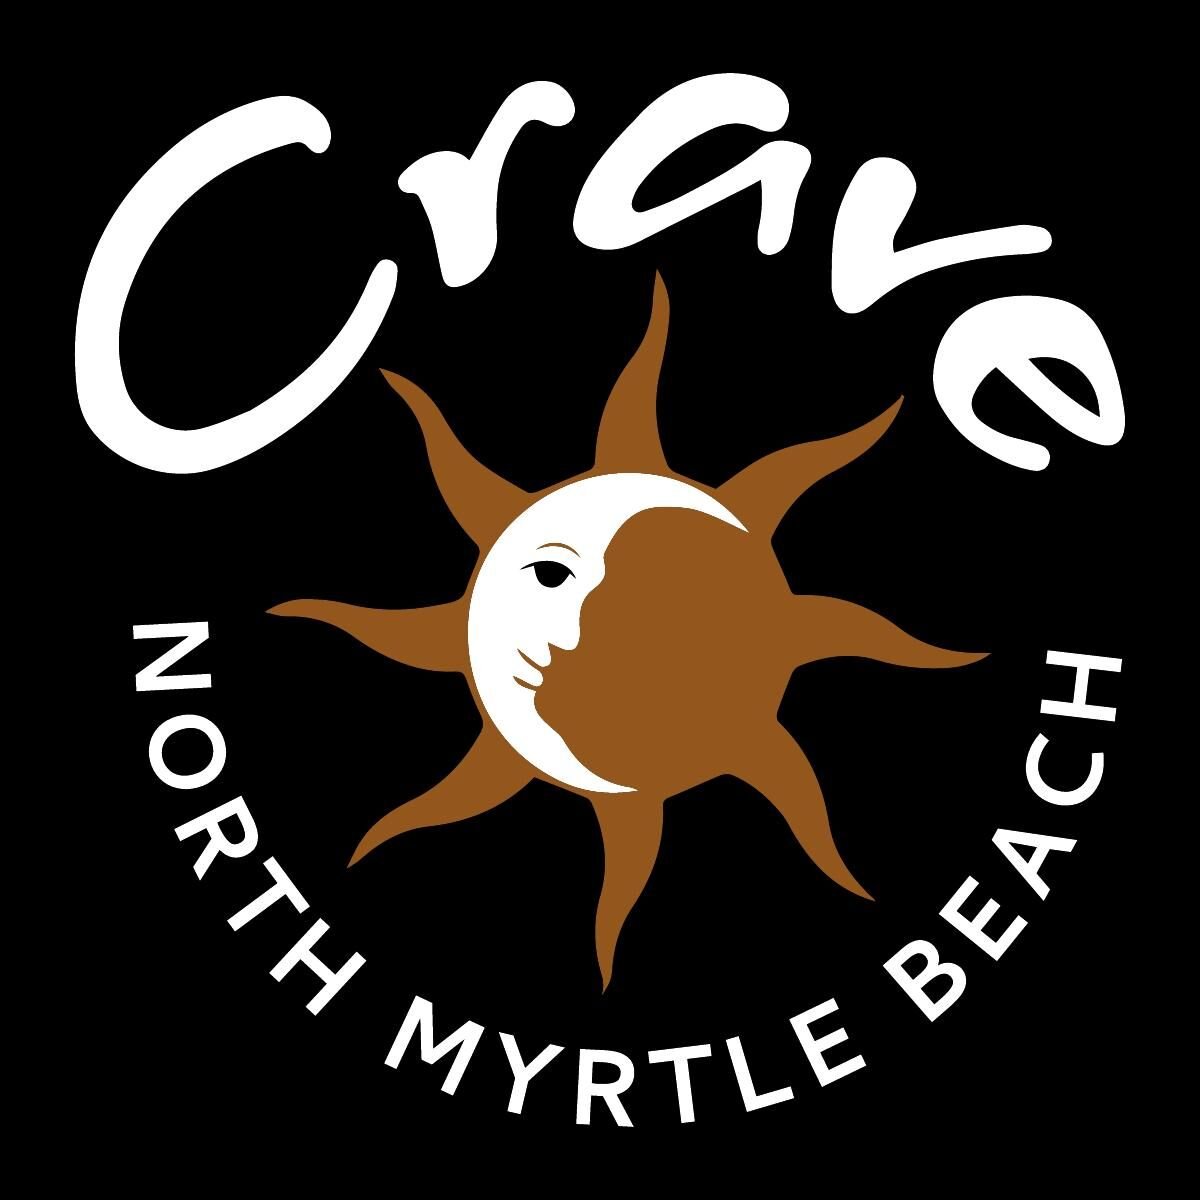 Crave logo